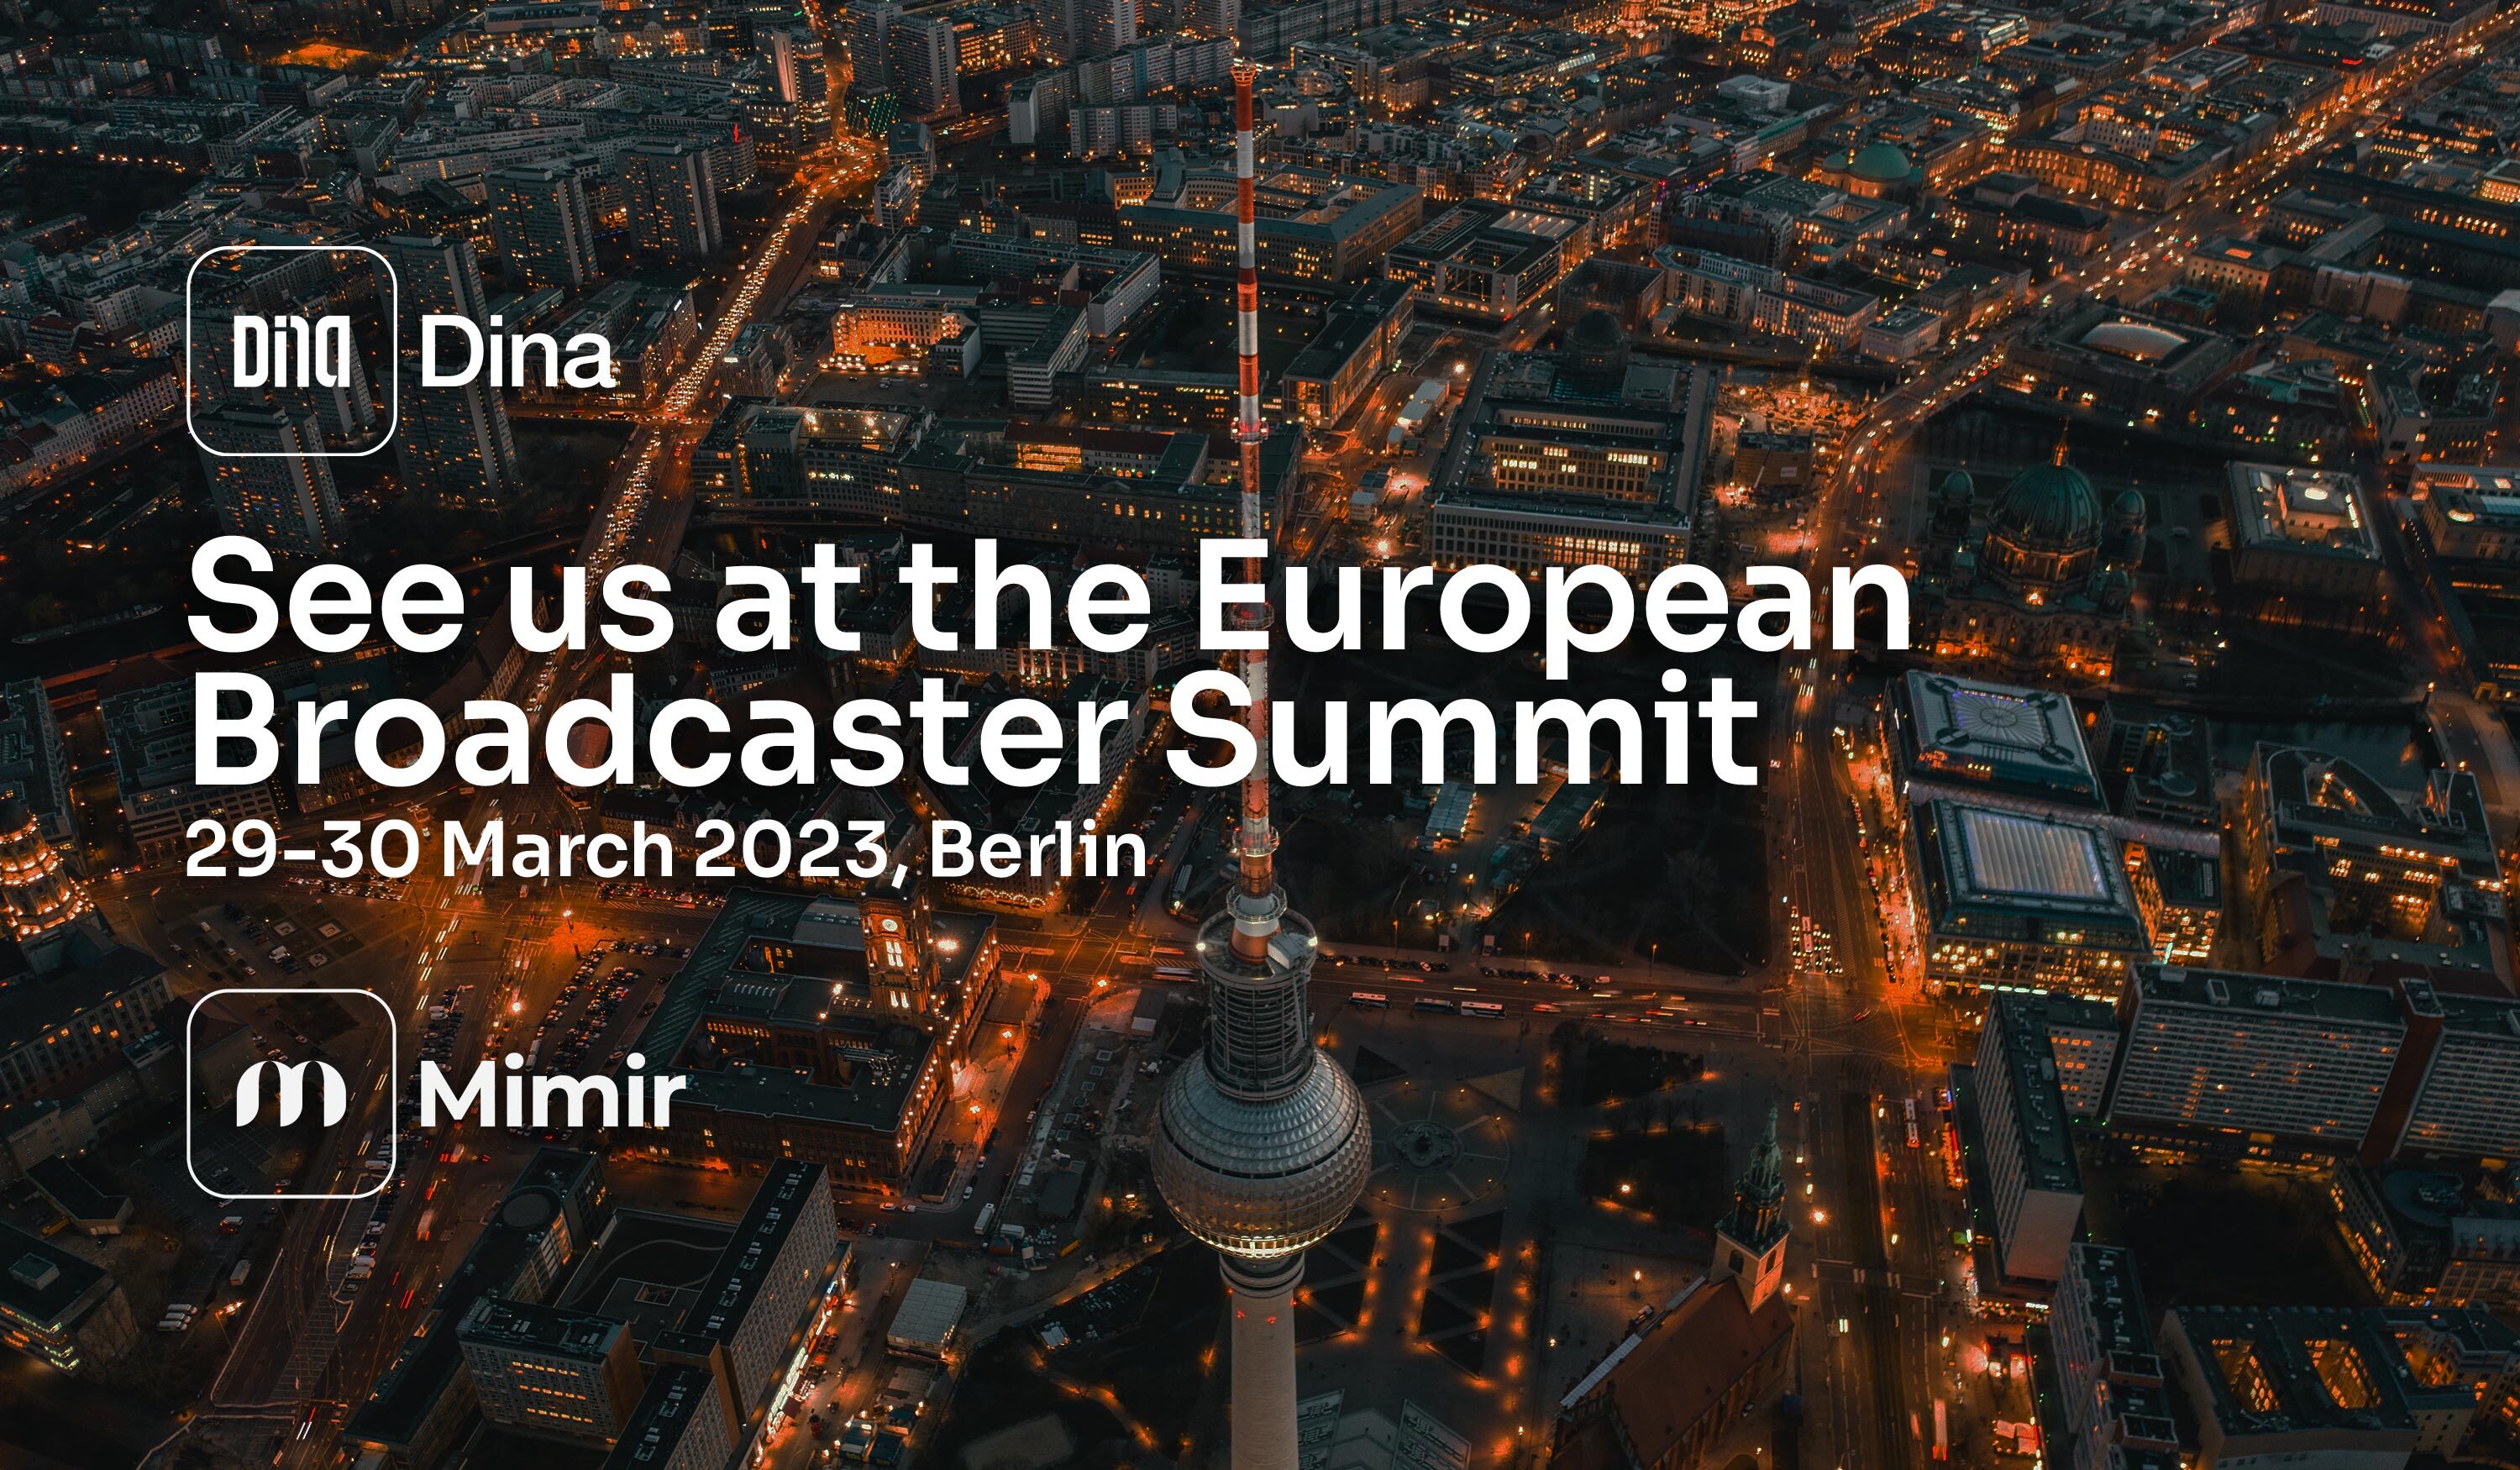 European Broadcaster Summit feature image 